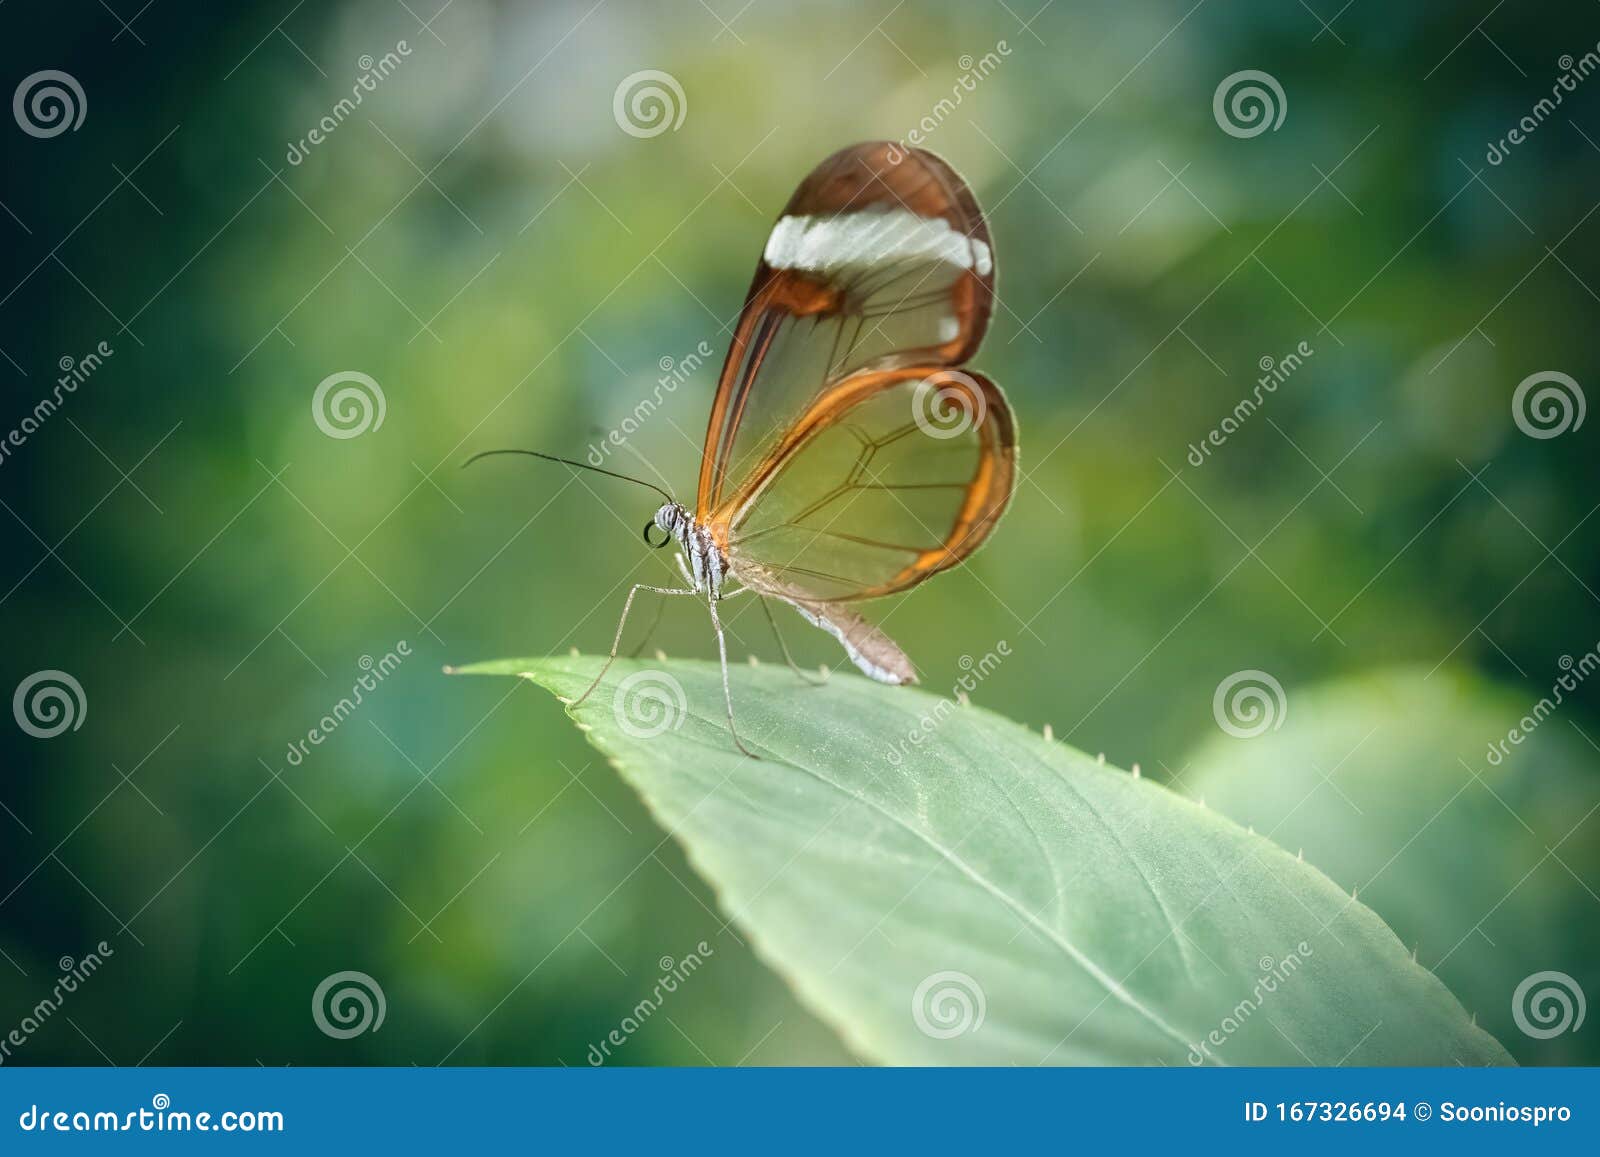 glasswing butterfly in a leaf greta oto. close-up